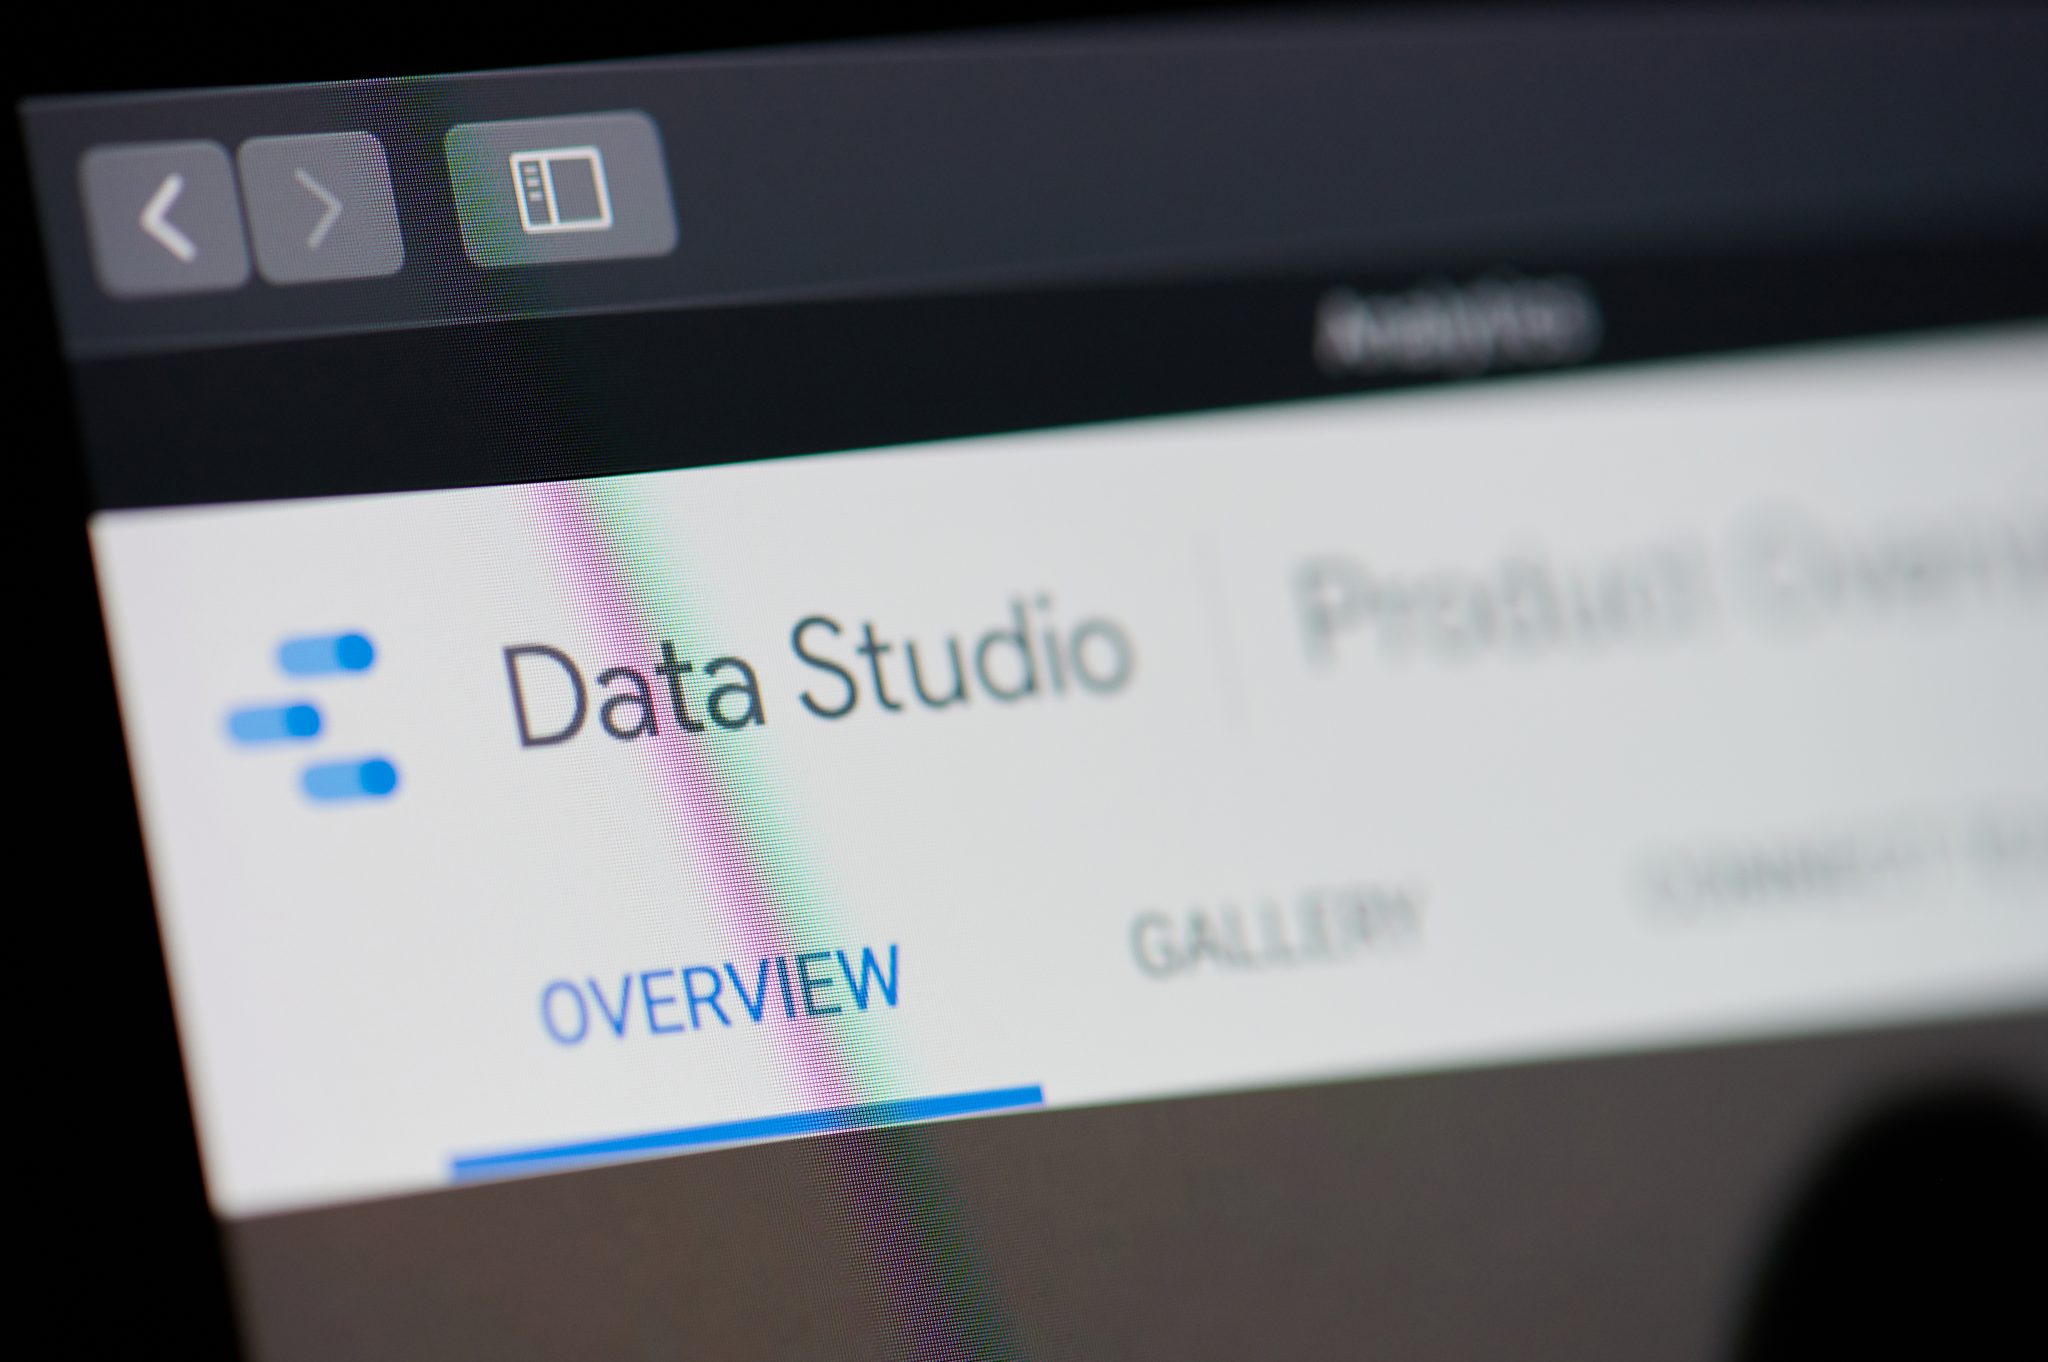 The Google Data Studio interface